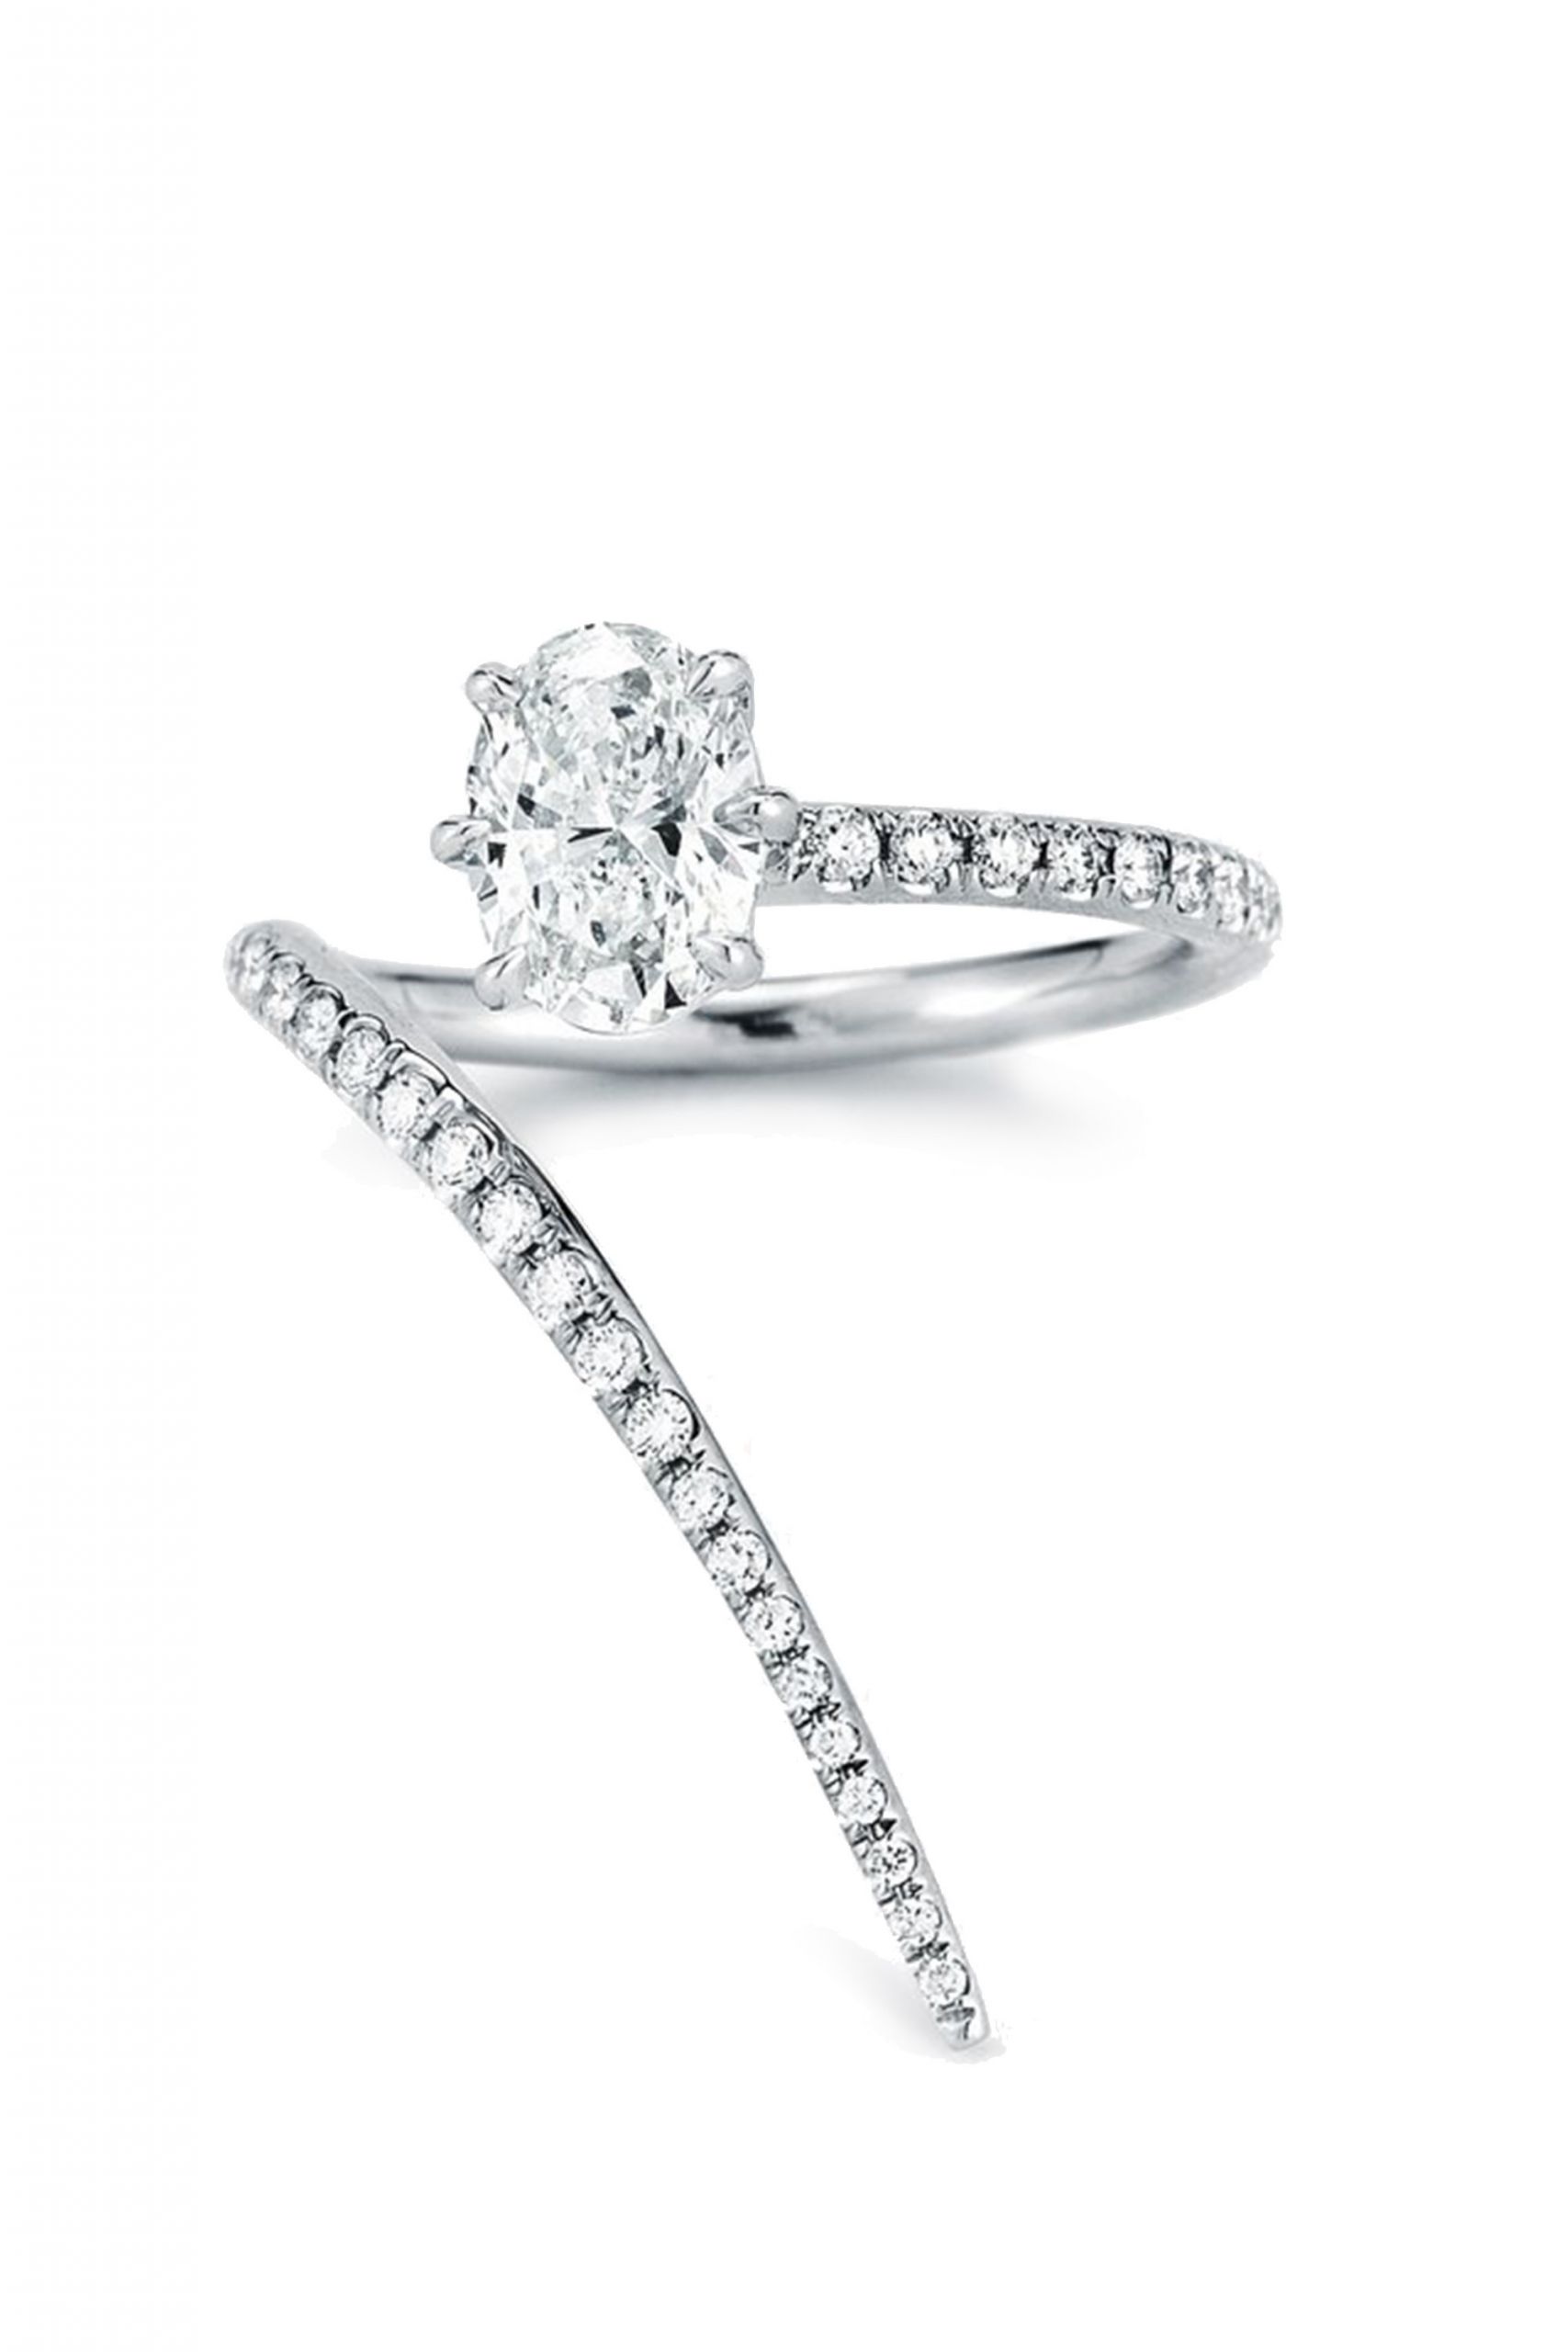 Unique Diamond Engagement Rings
 27 Unique Engagement Rings Beautiful Non Diamond and